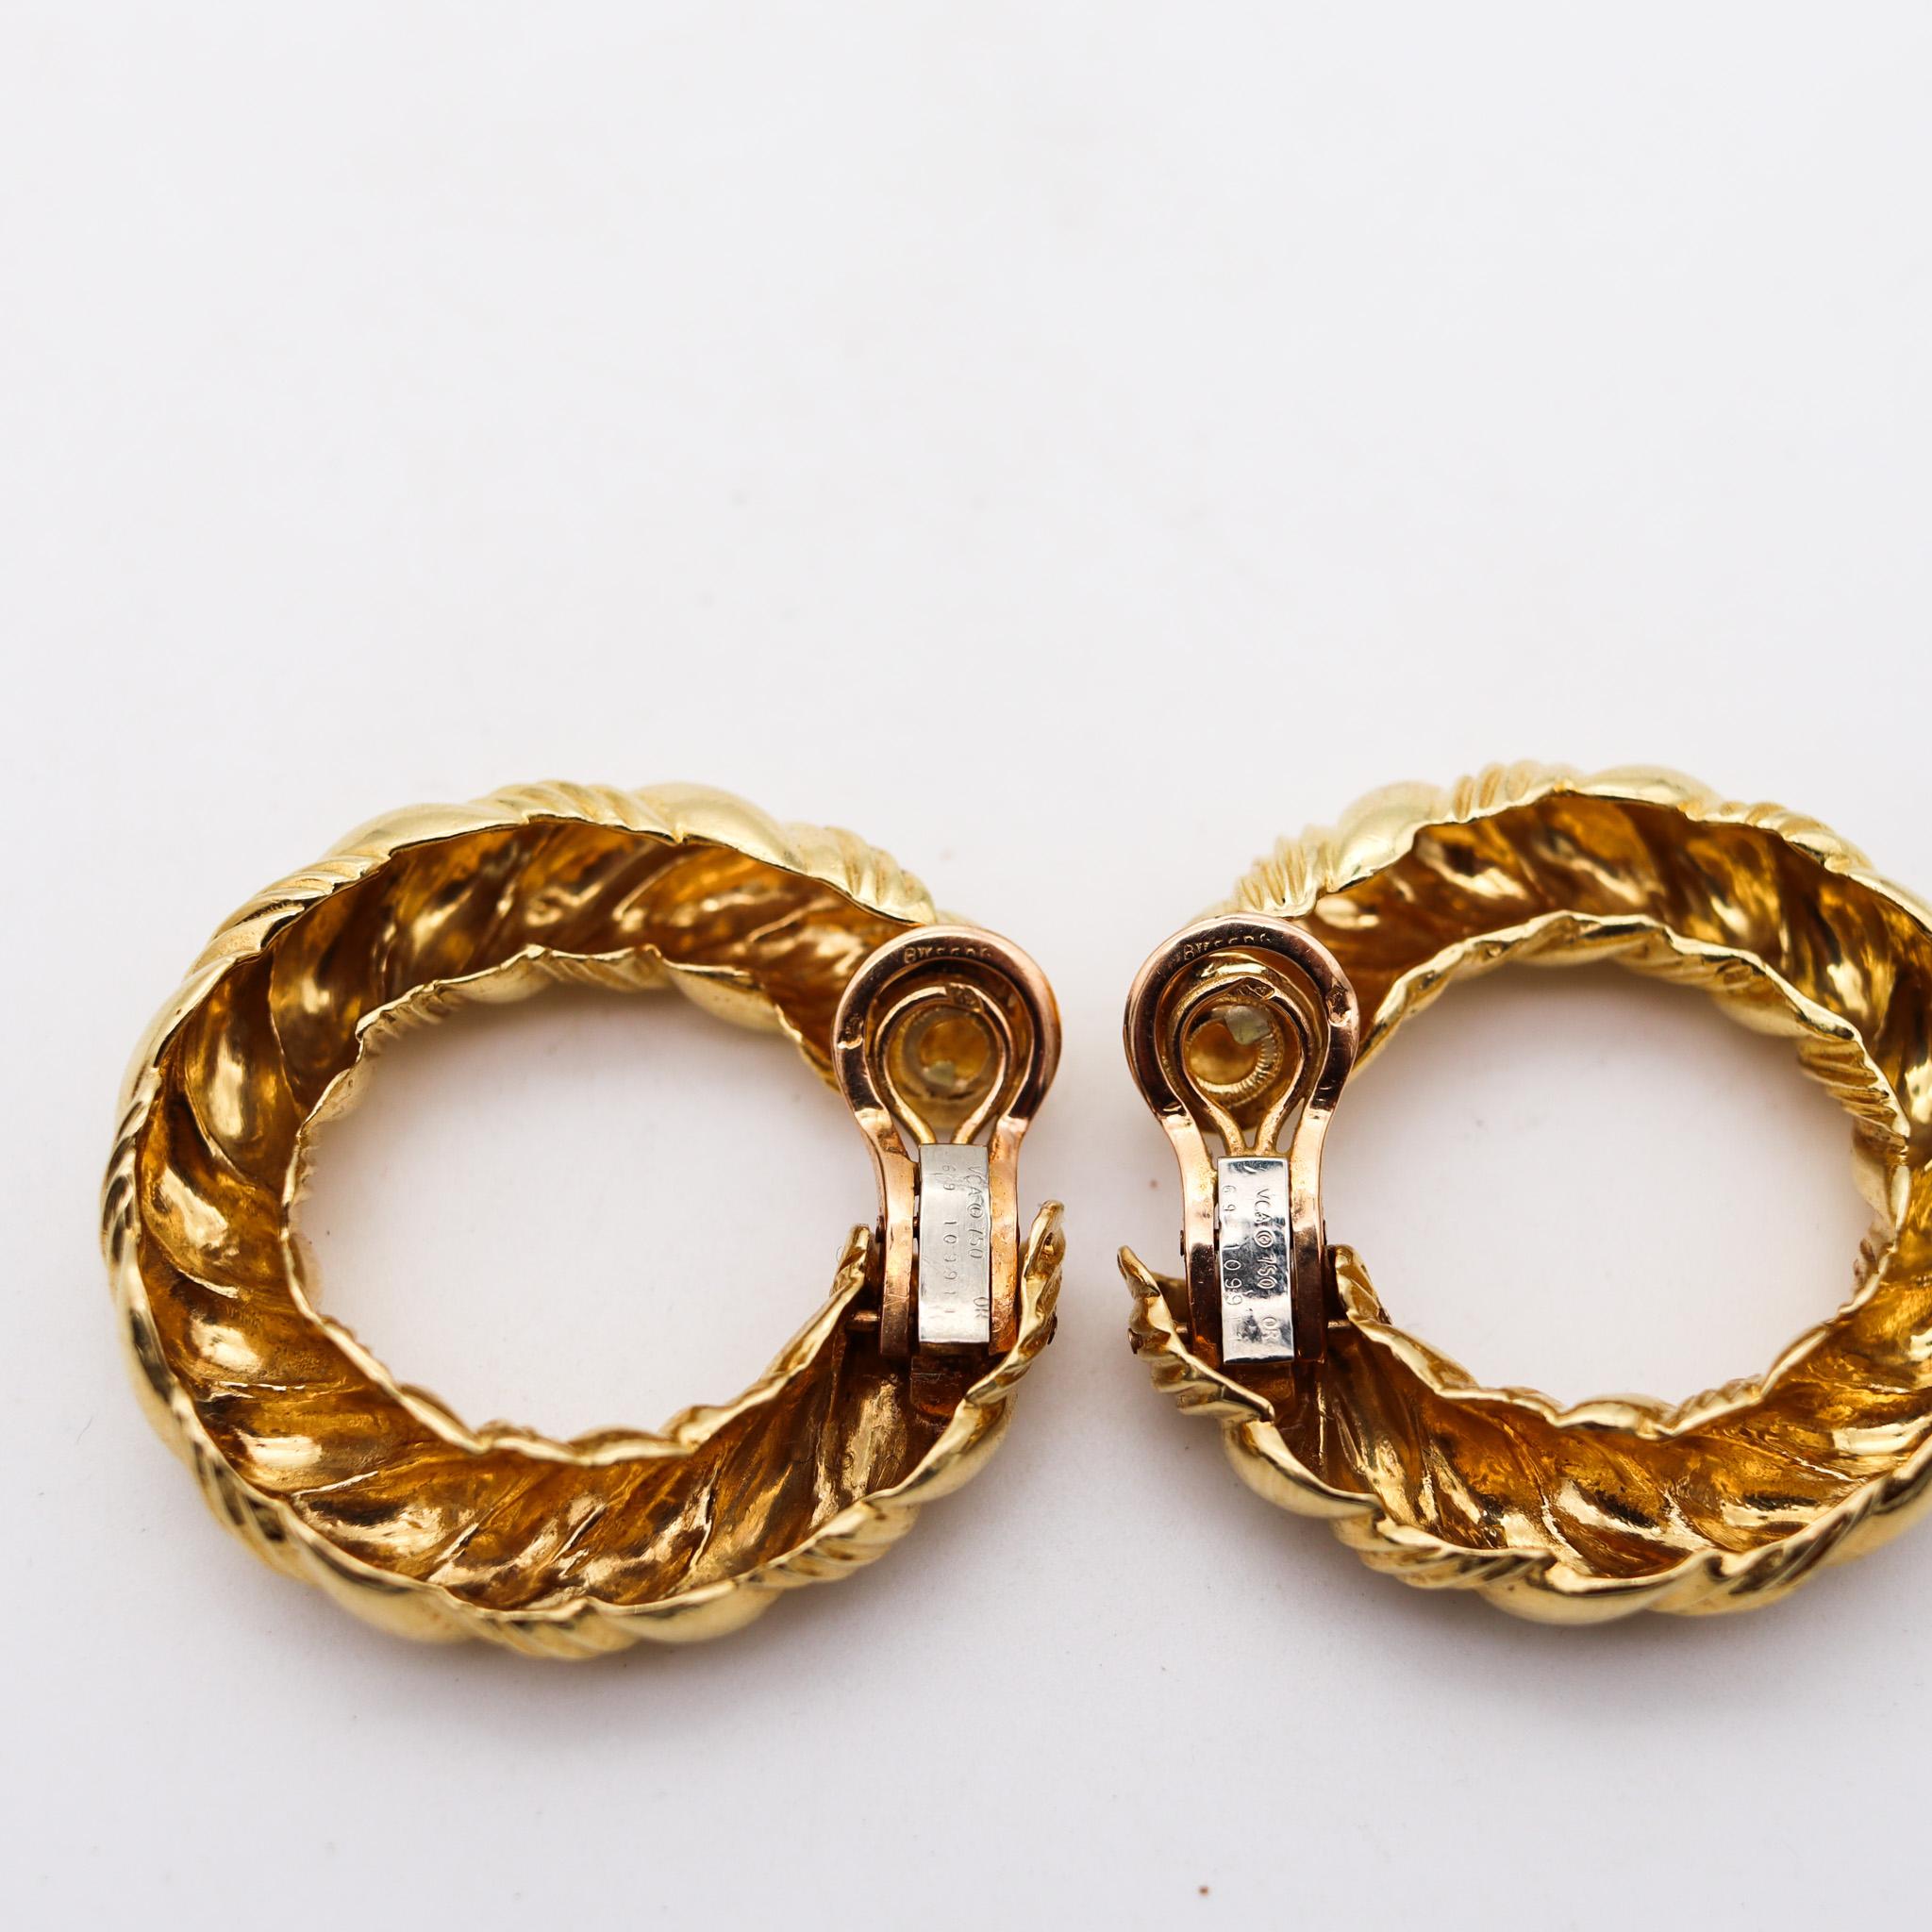 Modernist Van Cleef & Arpels 1969 Paris By Andre Vassort Hoops Clips Earrings In 18Kt Gold For Sale